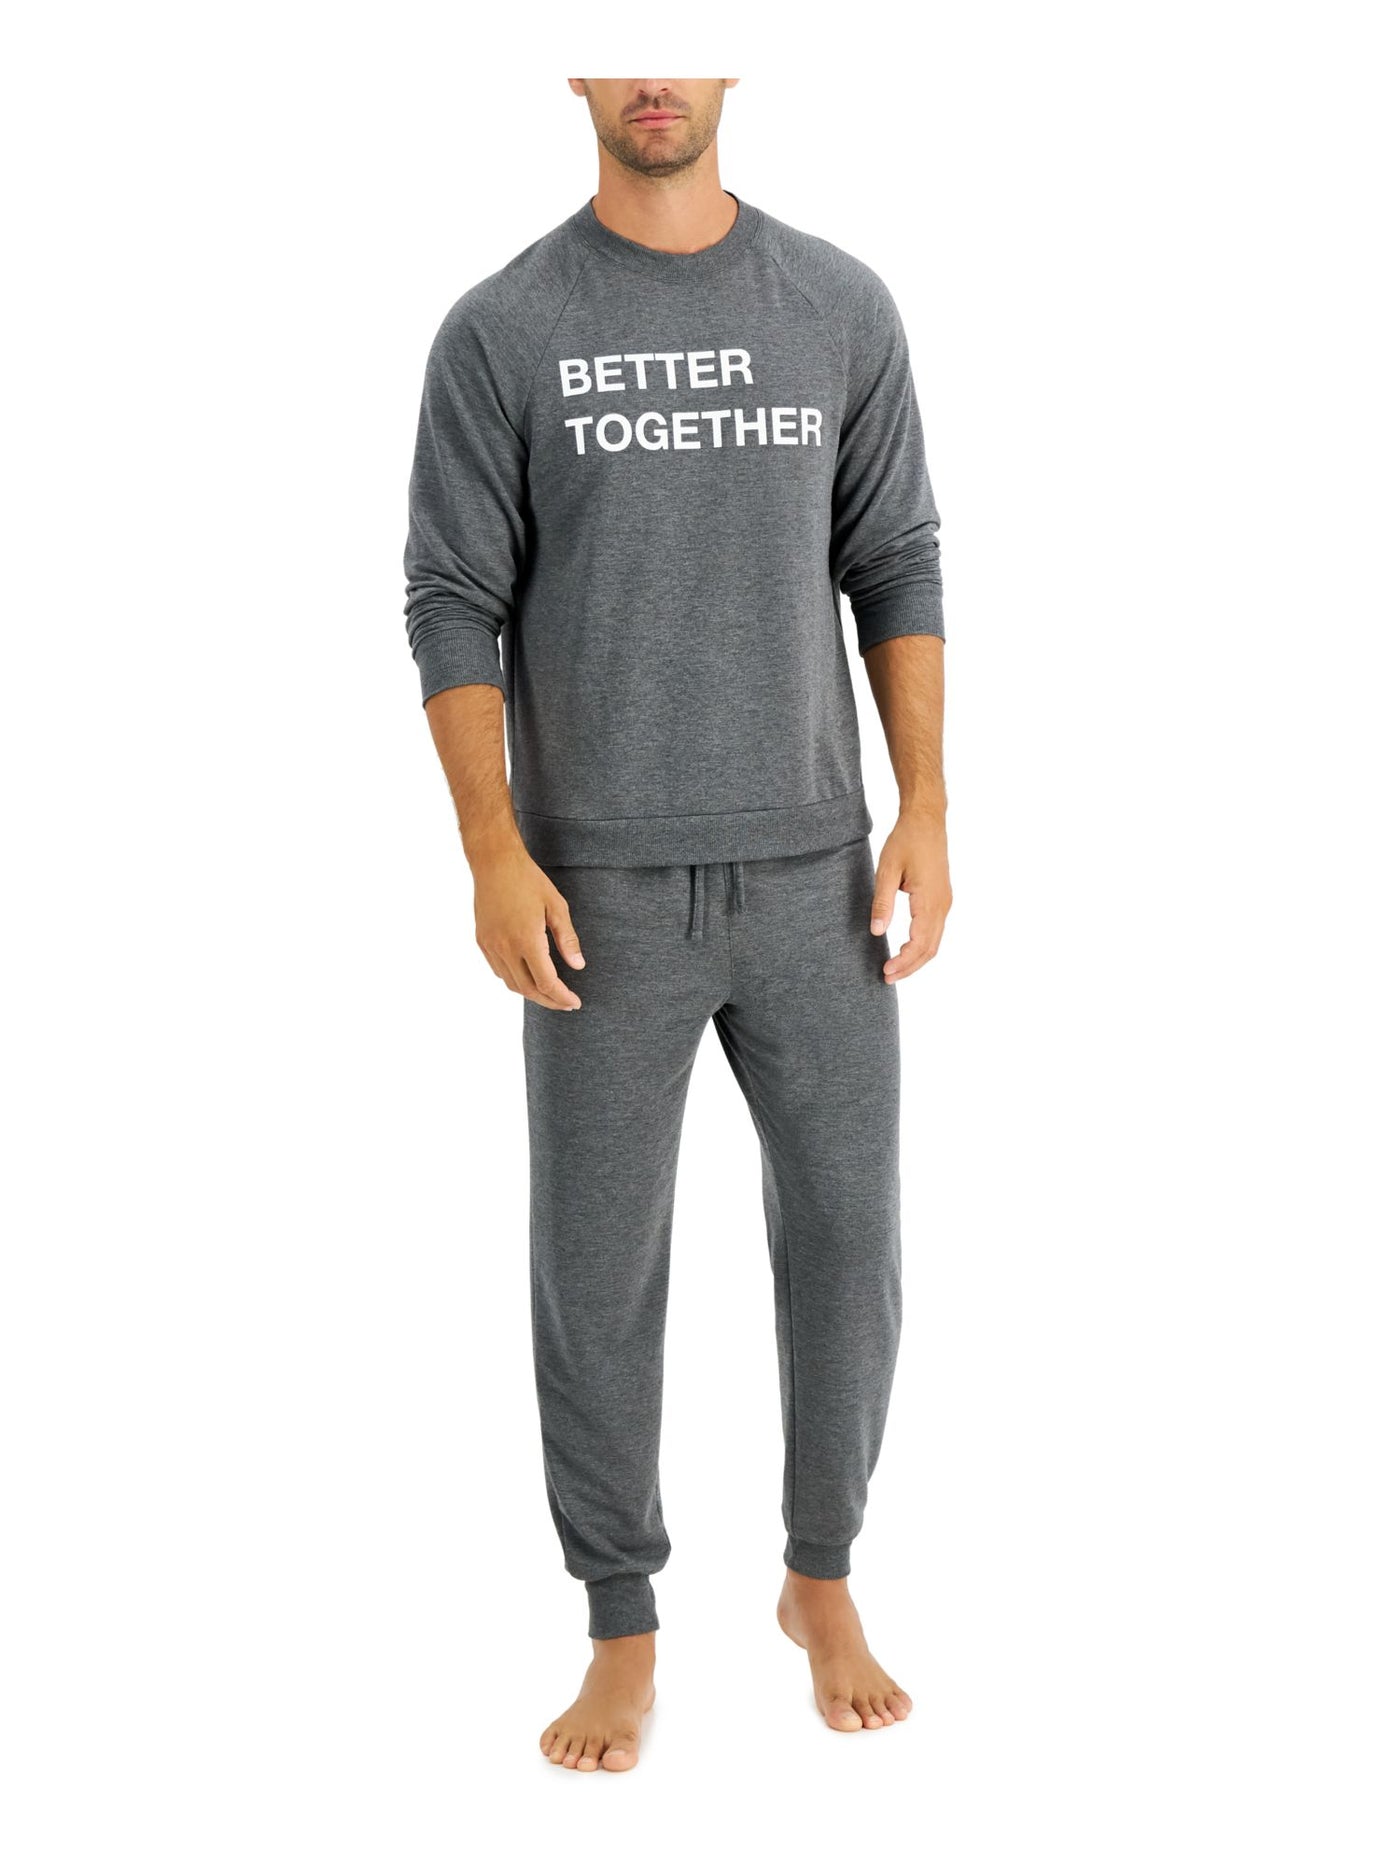 FAMILY PJs Mens Gray Graphic Drawstring Long Sleeve T-Shirt Top Cuffed Pants Pajamas L